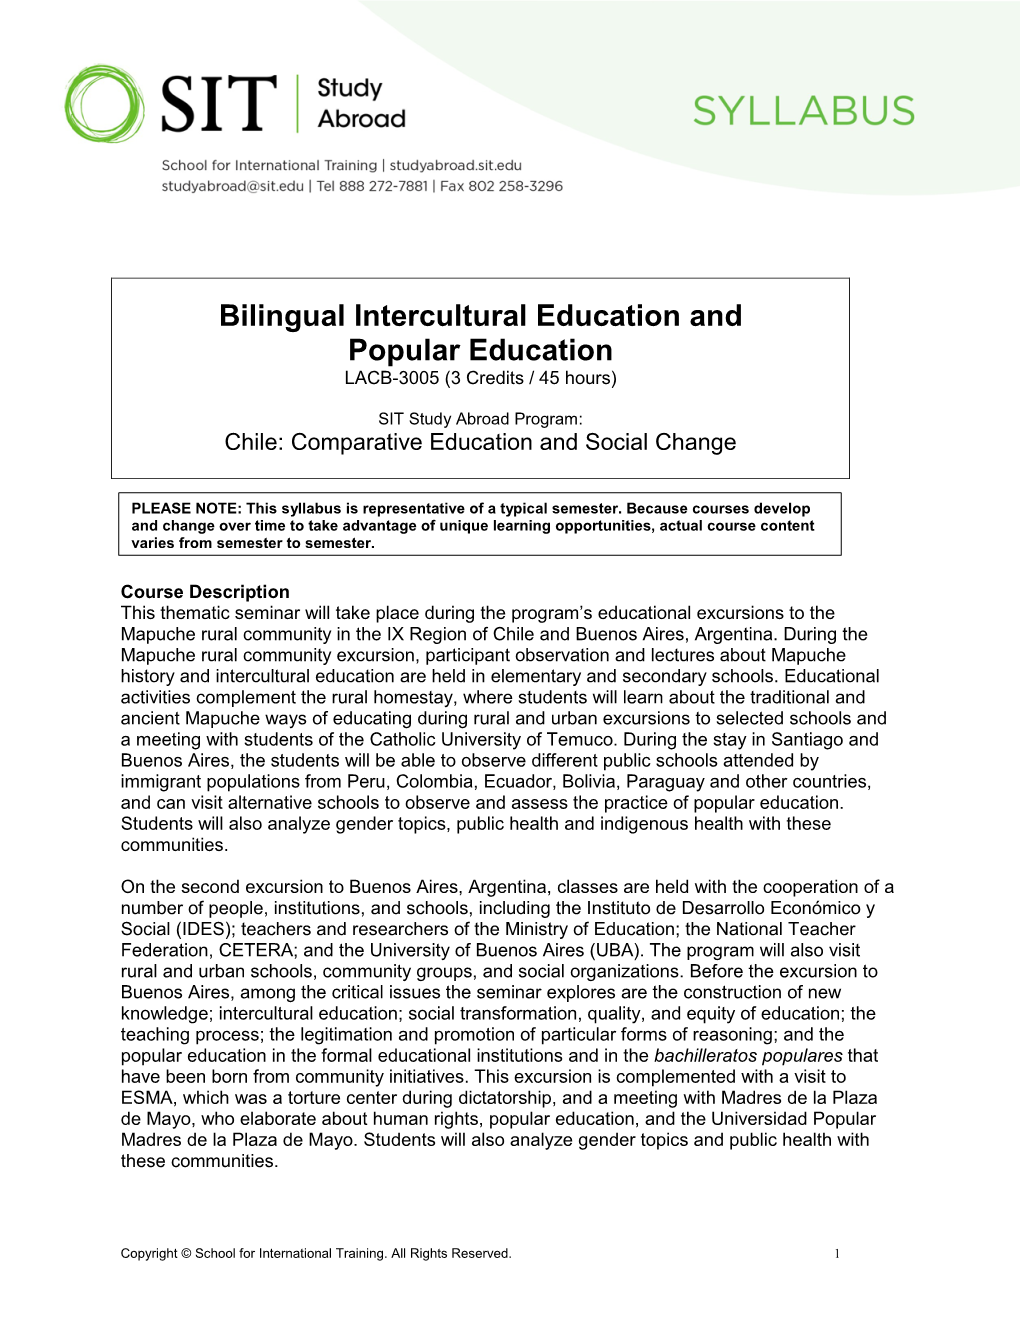 Bilingual Intercultural Education and Popular Education